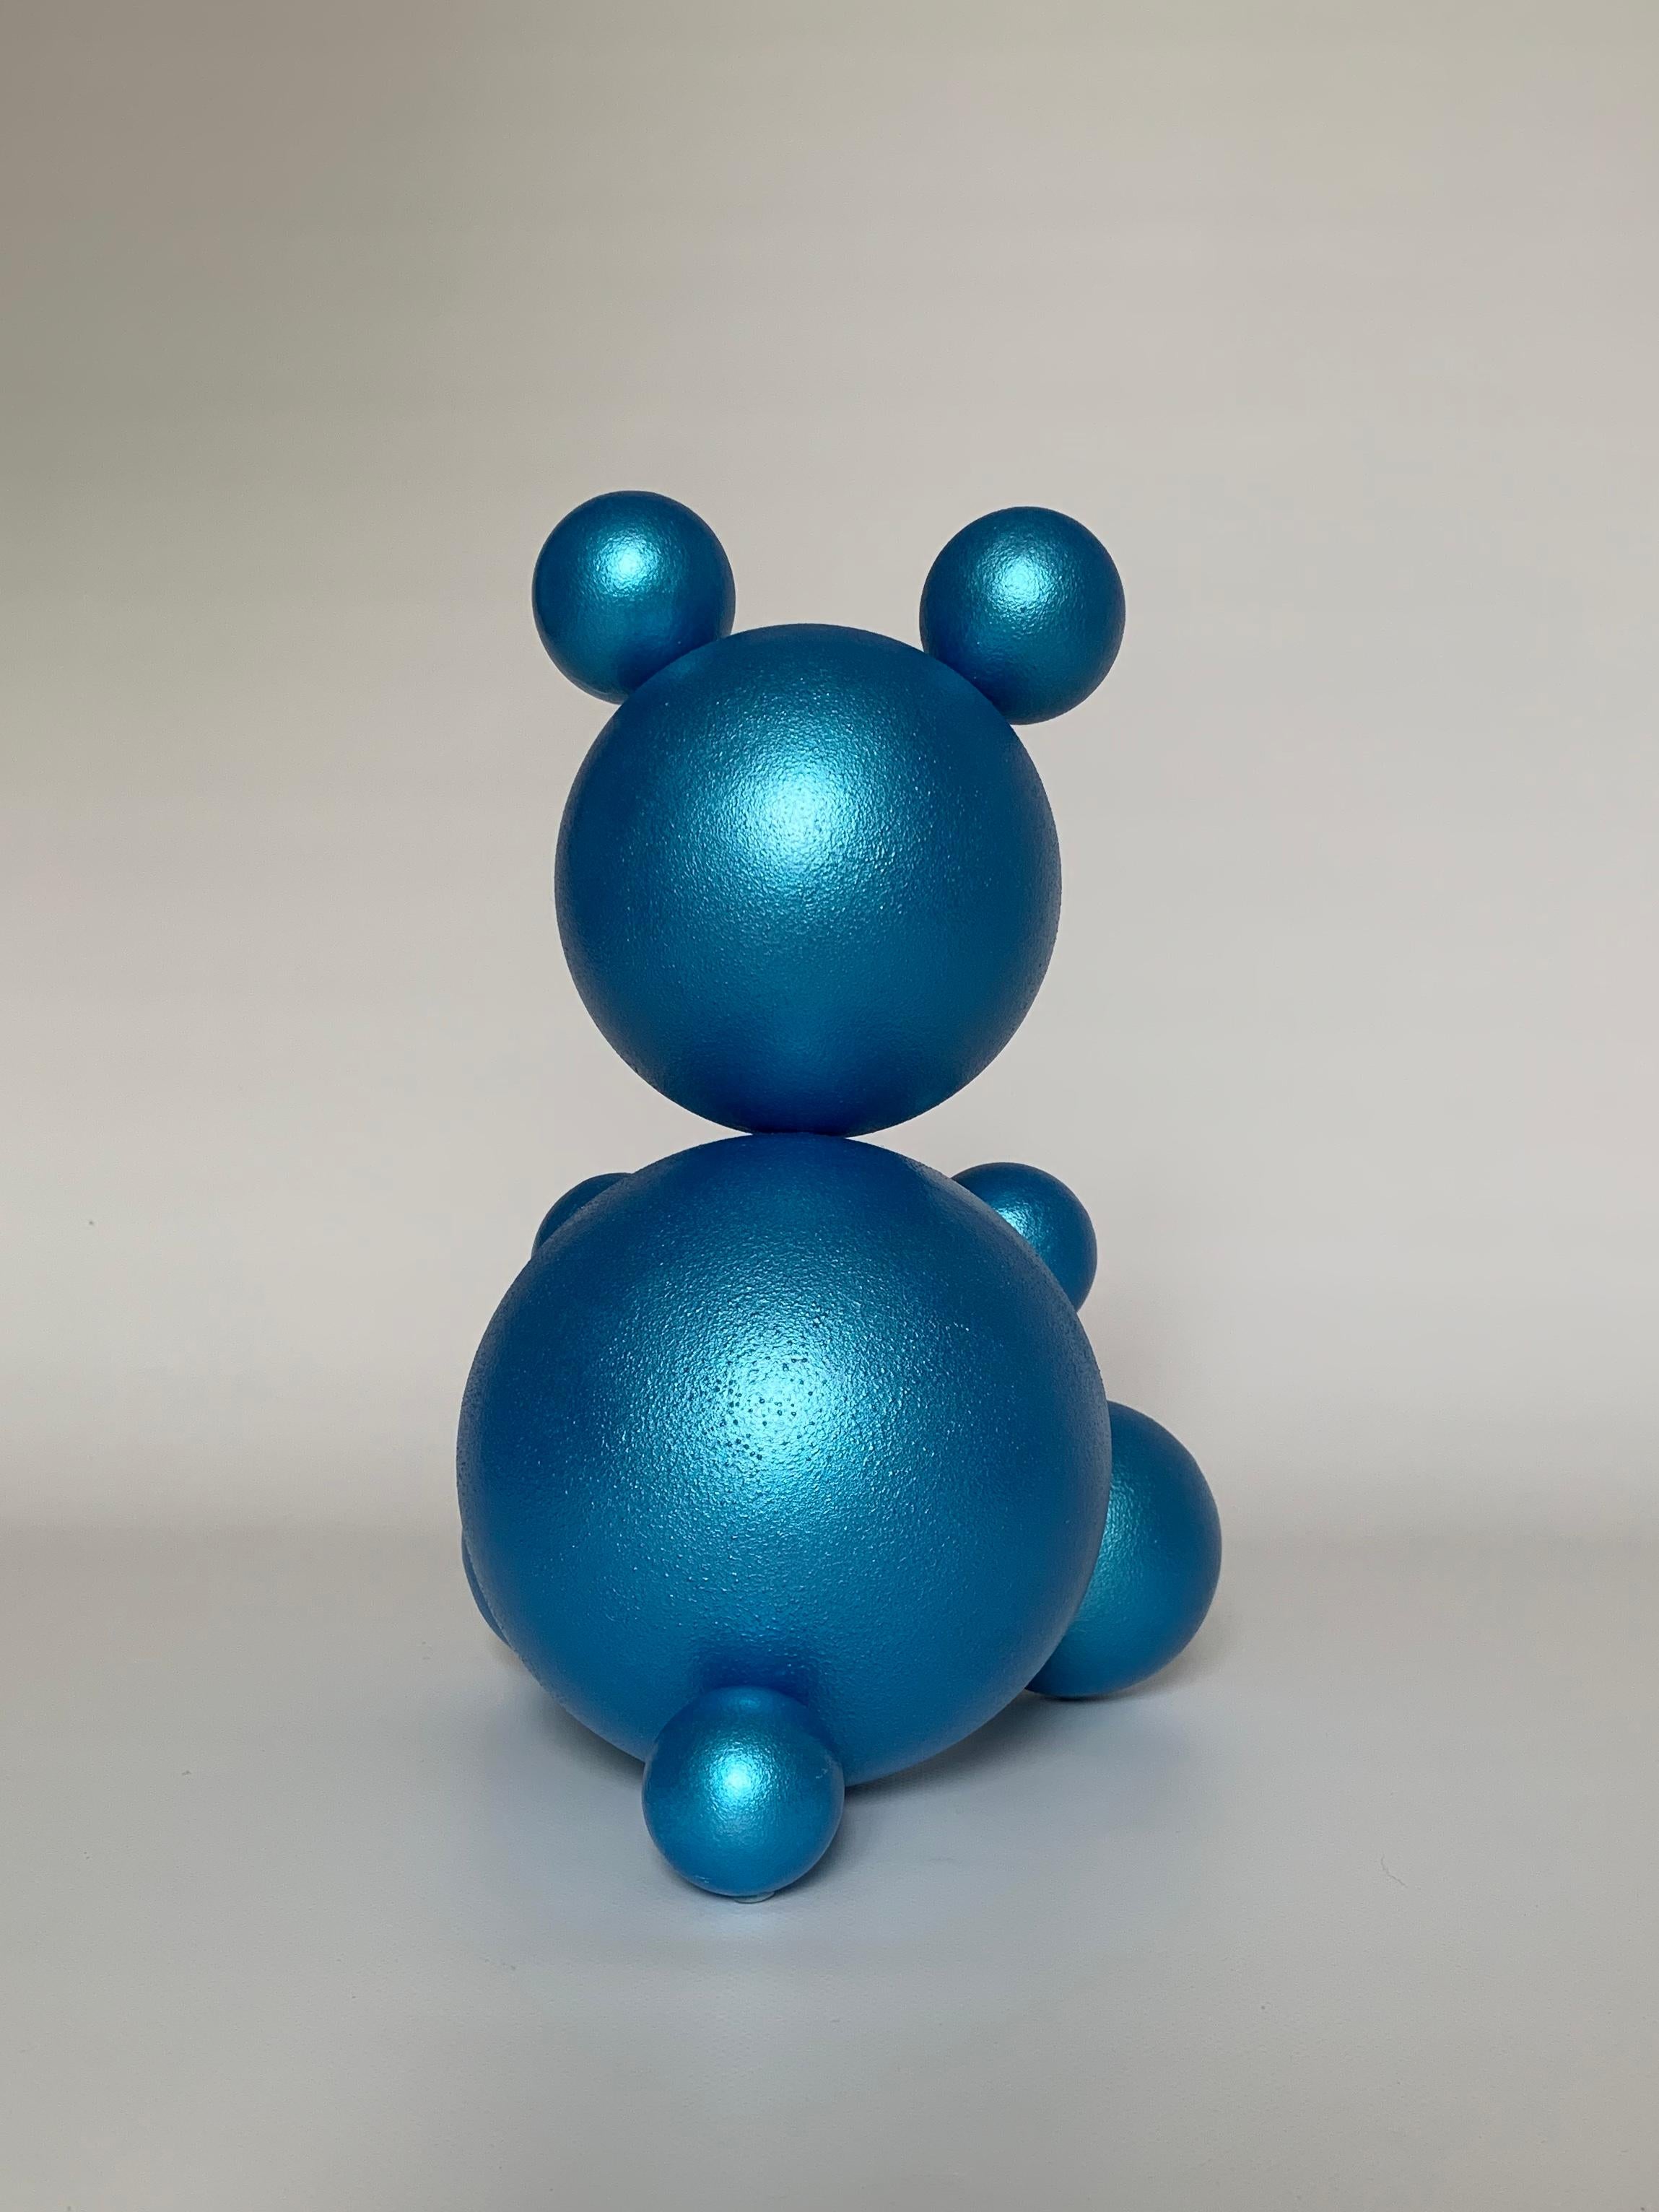 Steel BLUE BEAR Animal Abstract Sculpture - Gray Figurative Sculpture by Rostyslav Kozhman